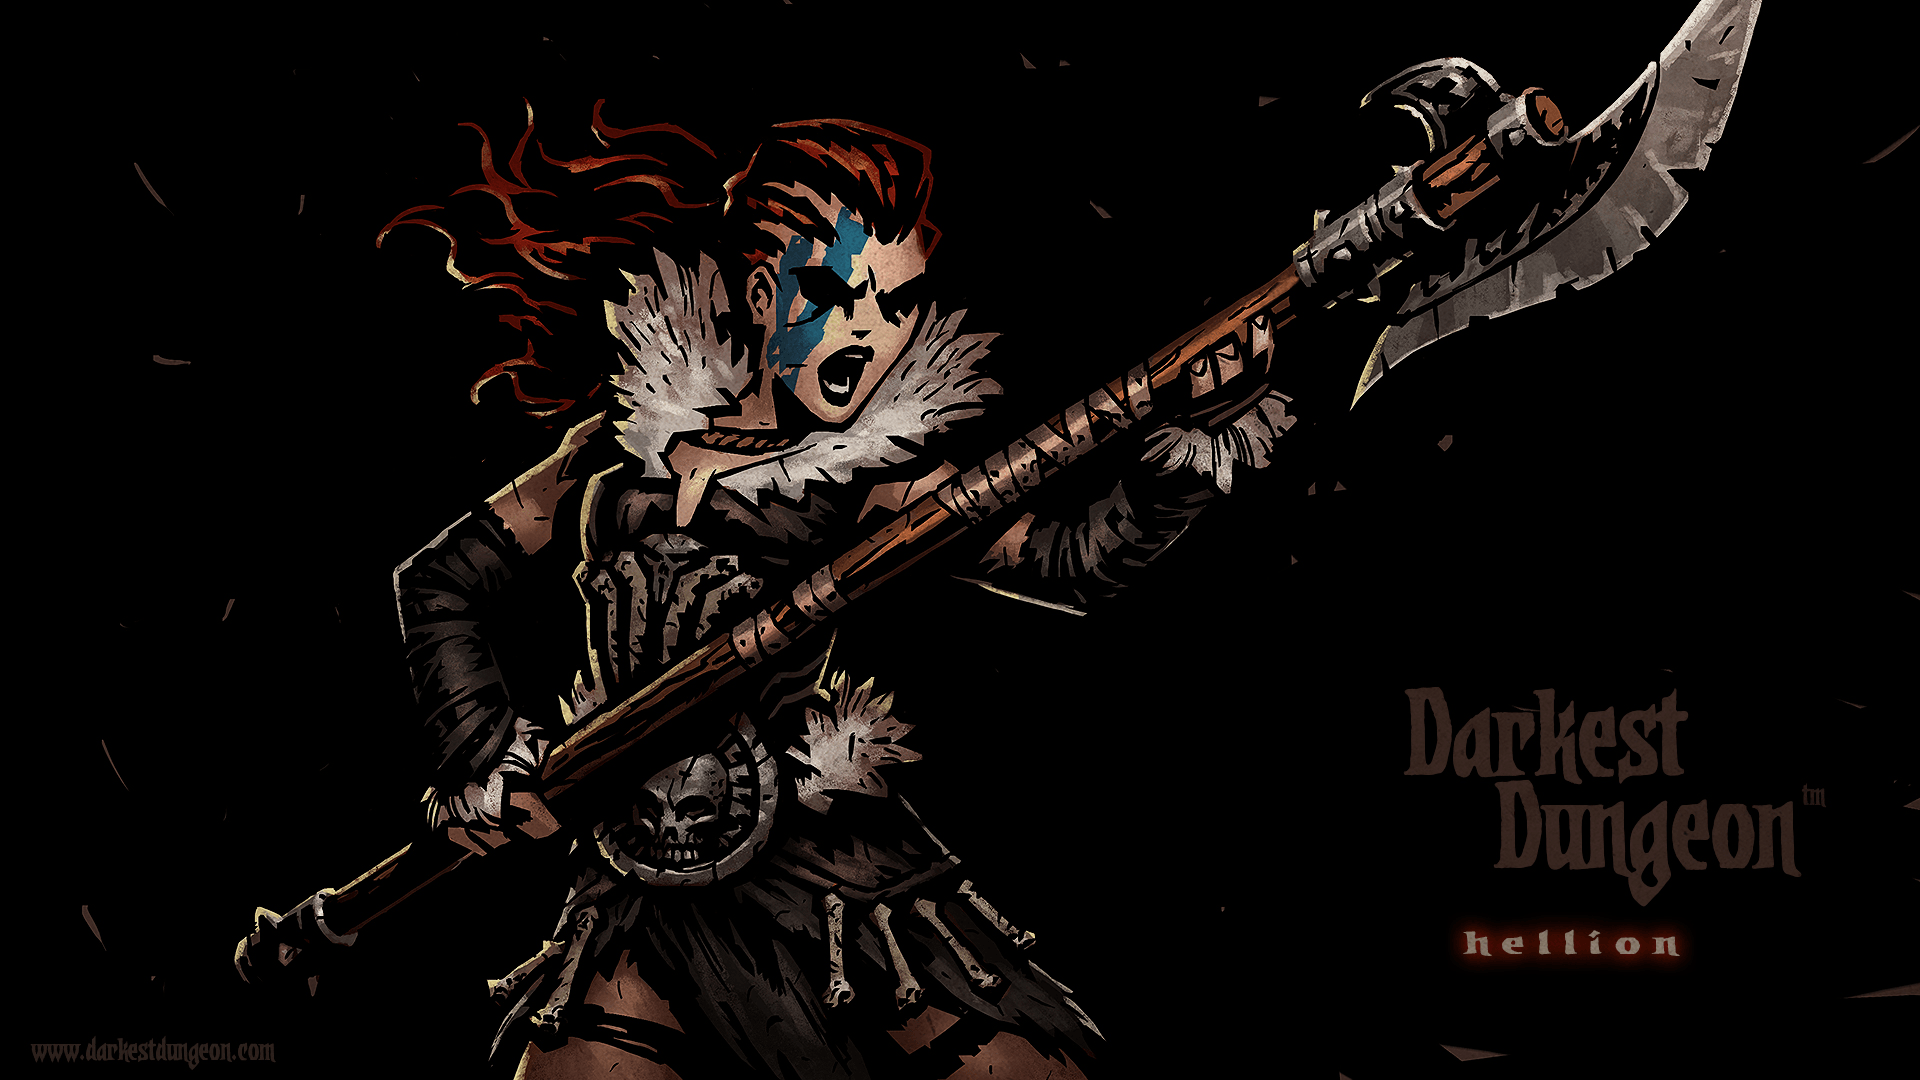 Darkest Dungeon Full HD Wallpaper and Background Imagex1080